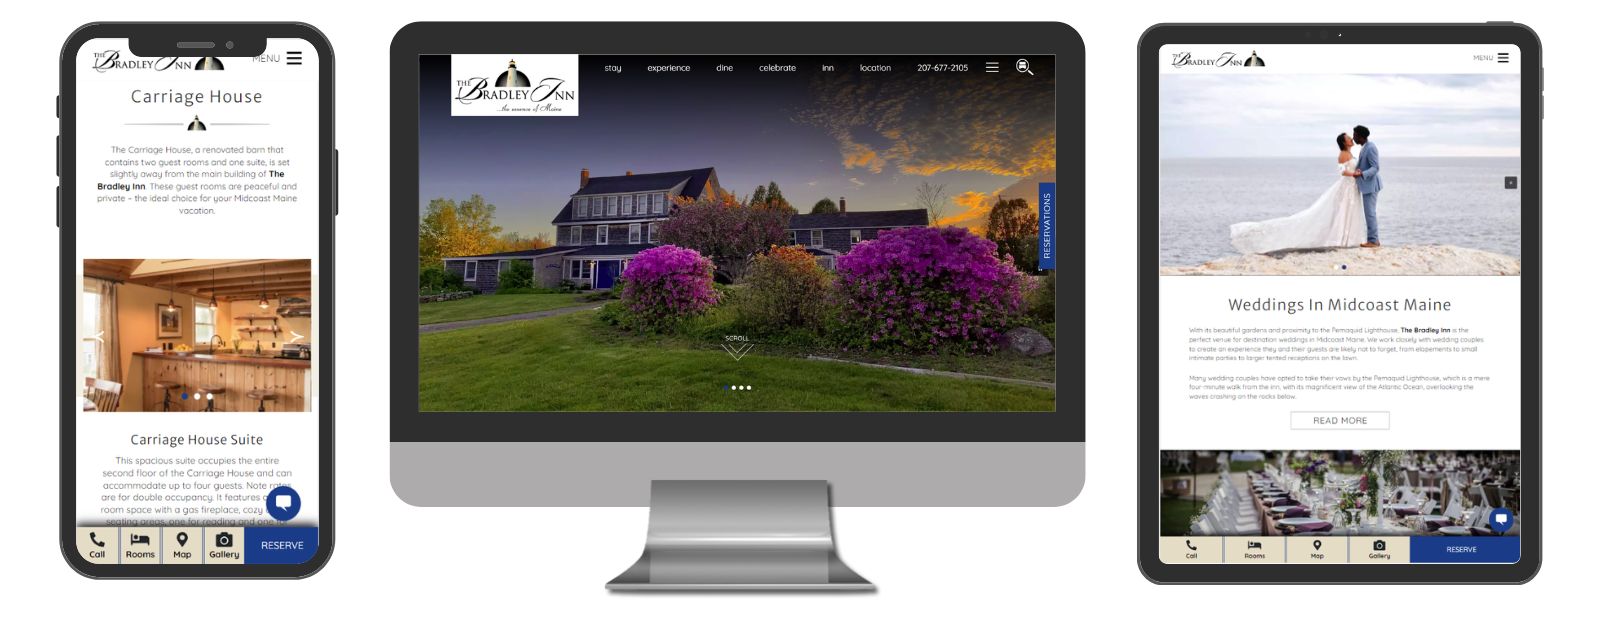 Screenshot of Desktop, Mobile and tablet views of the website for The Bradley Inn